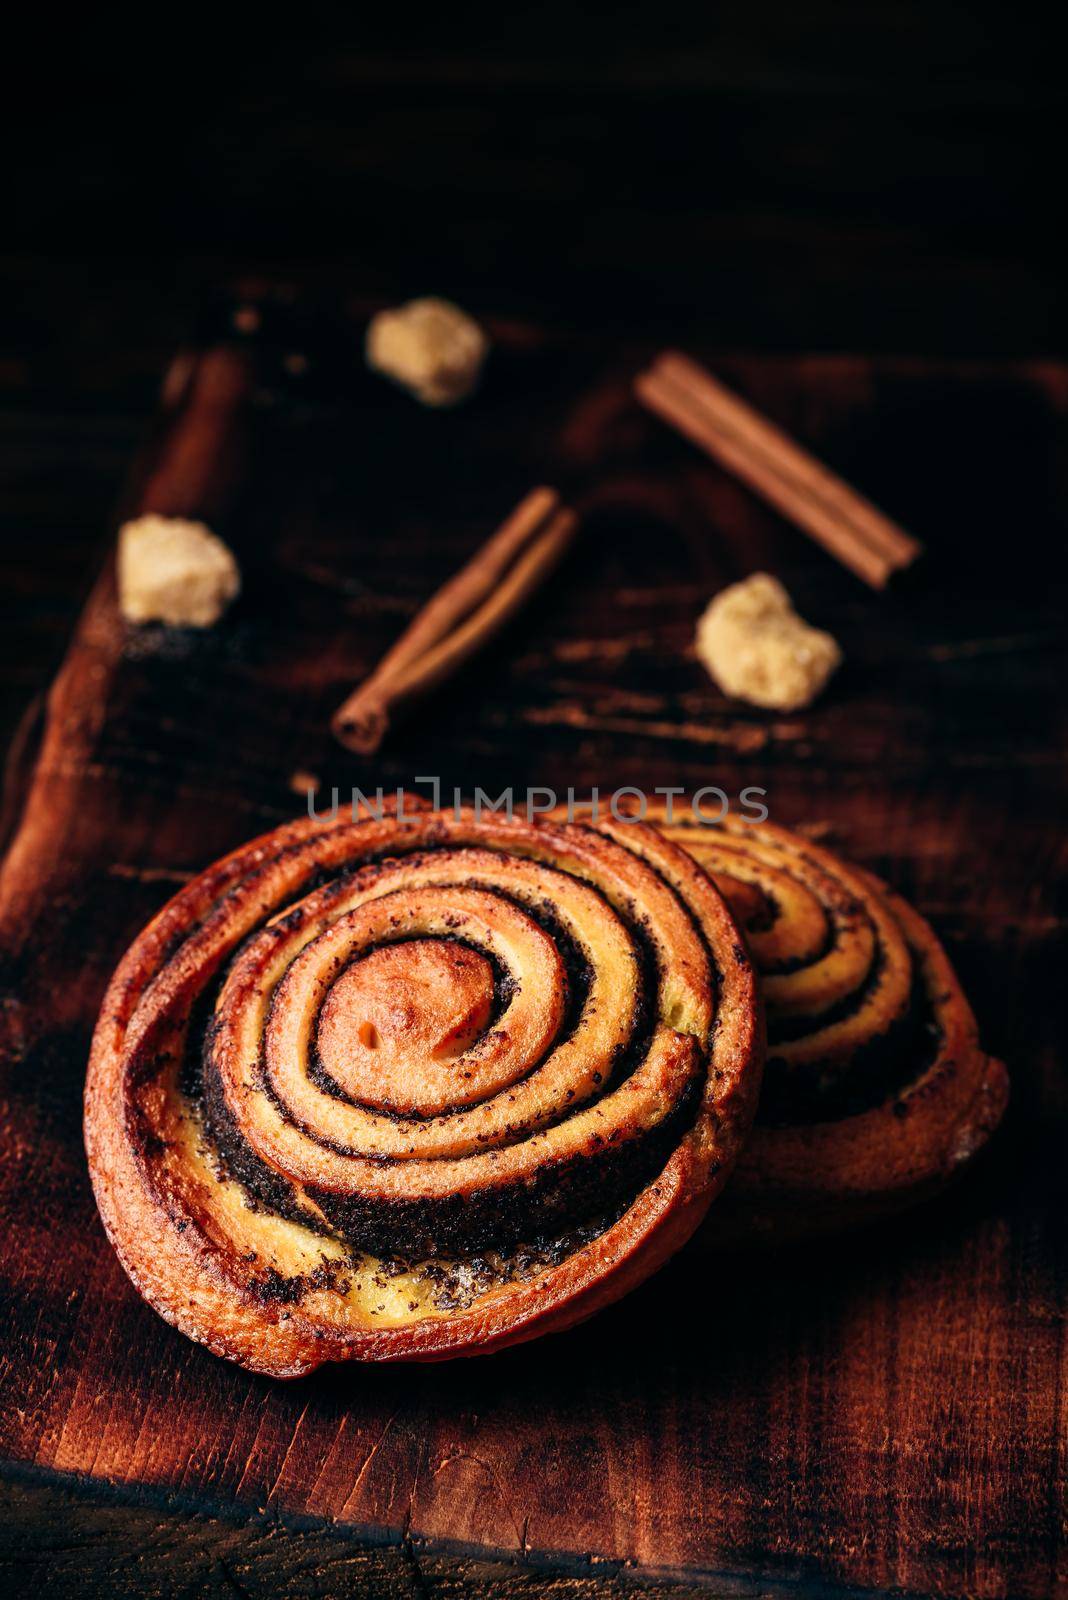 Sweet roll with poppy seeds by Seva_blsv